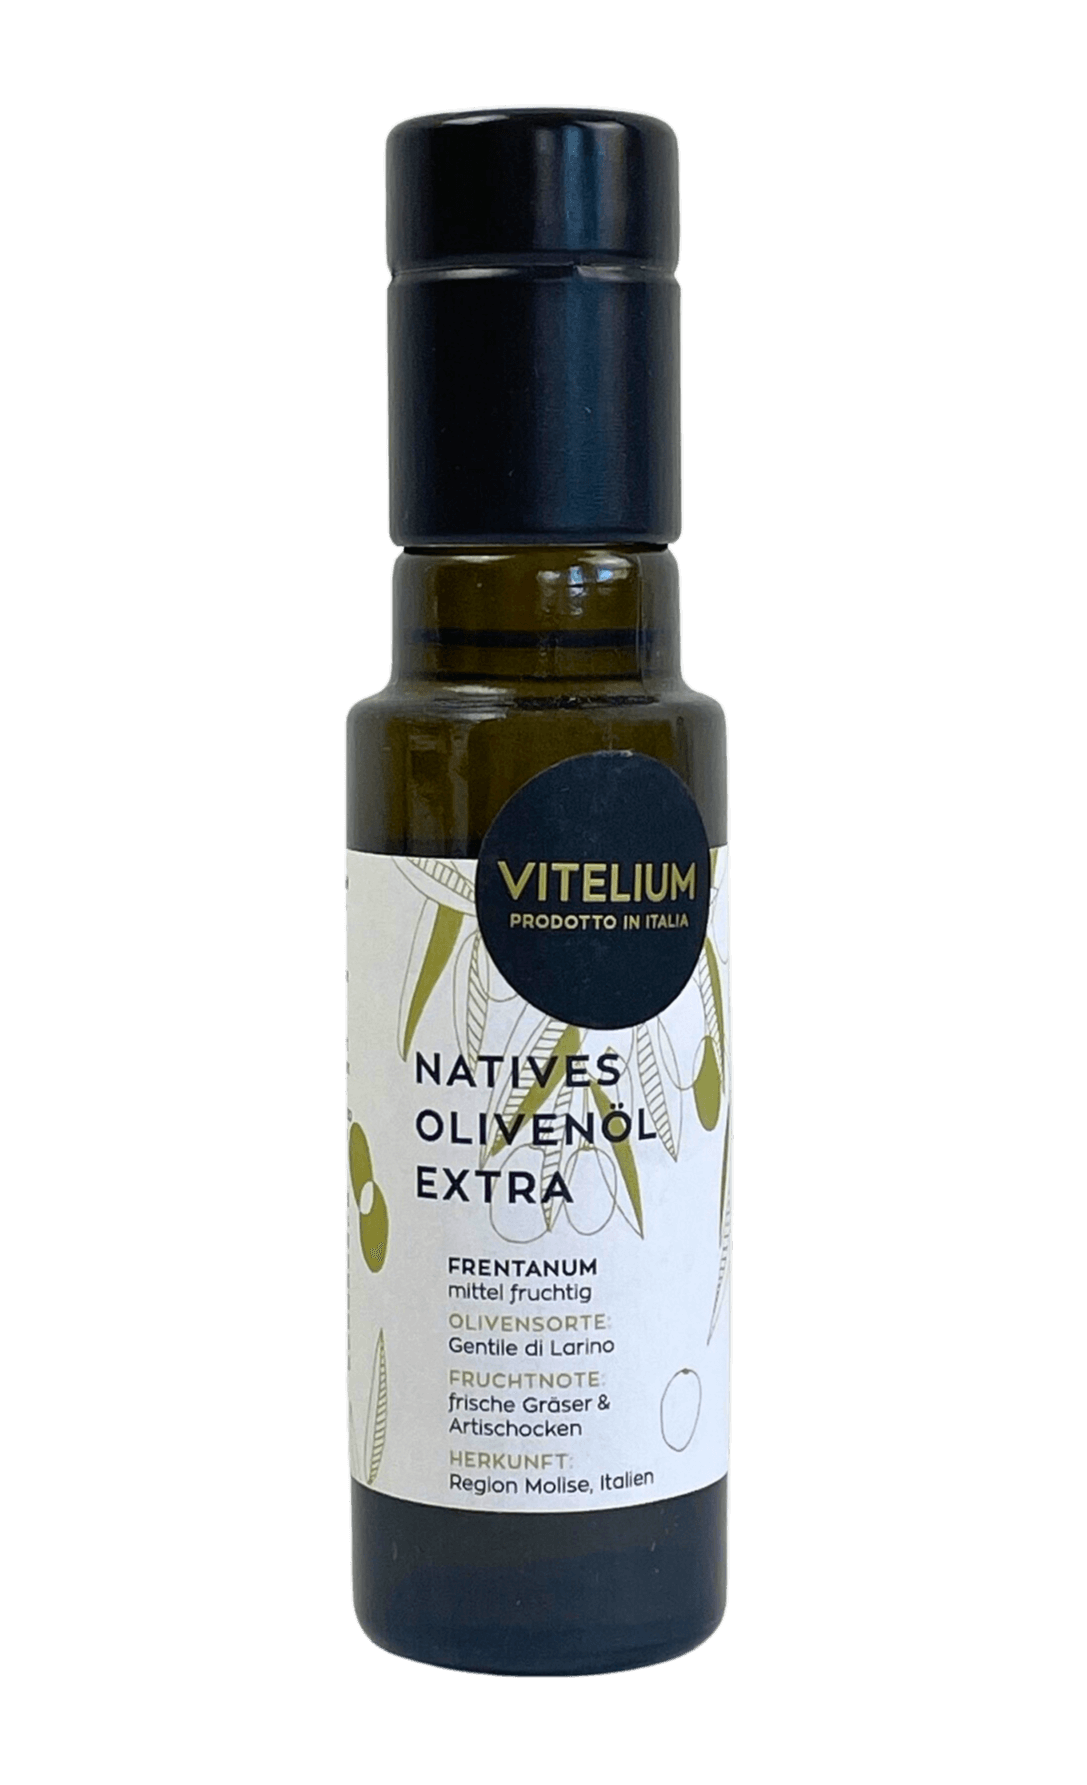 Natives Olivenöl Extra - FRETANUM - mittelfruchtig